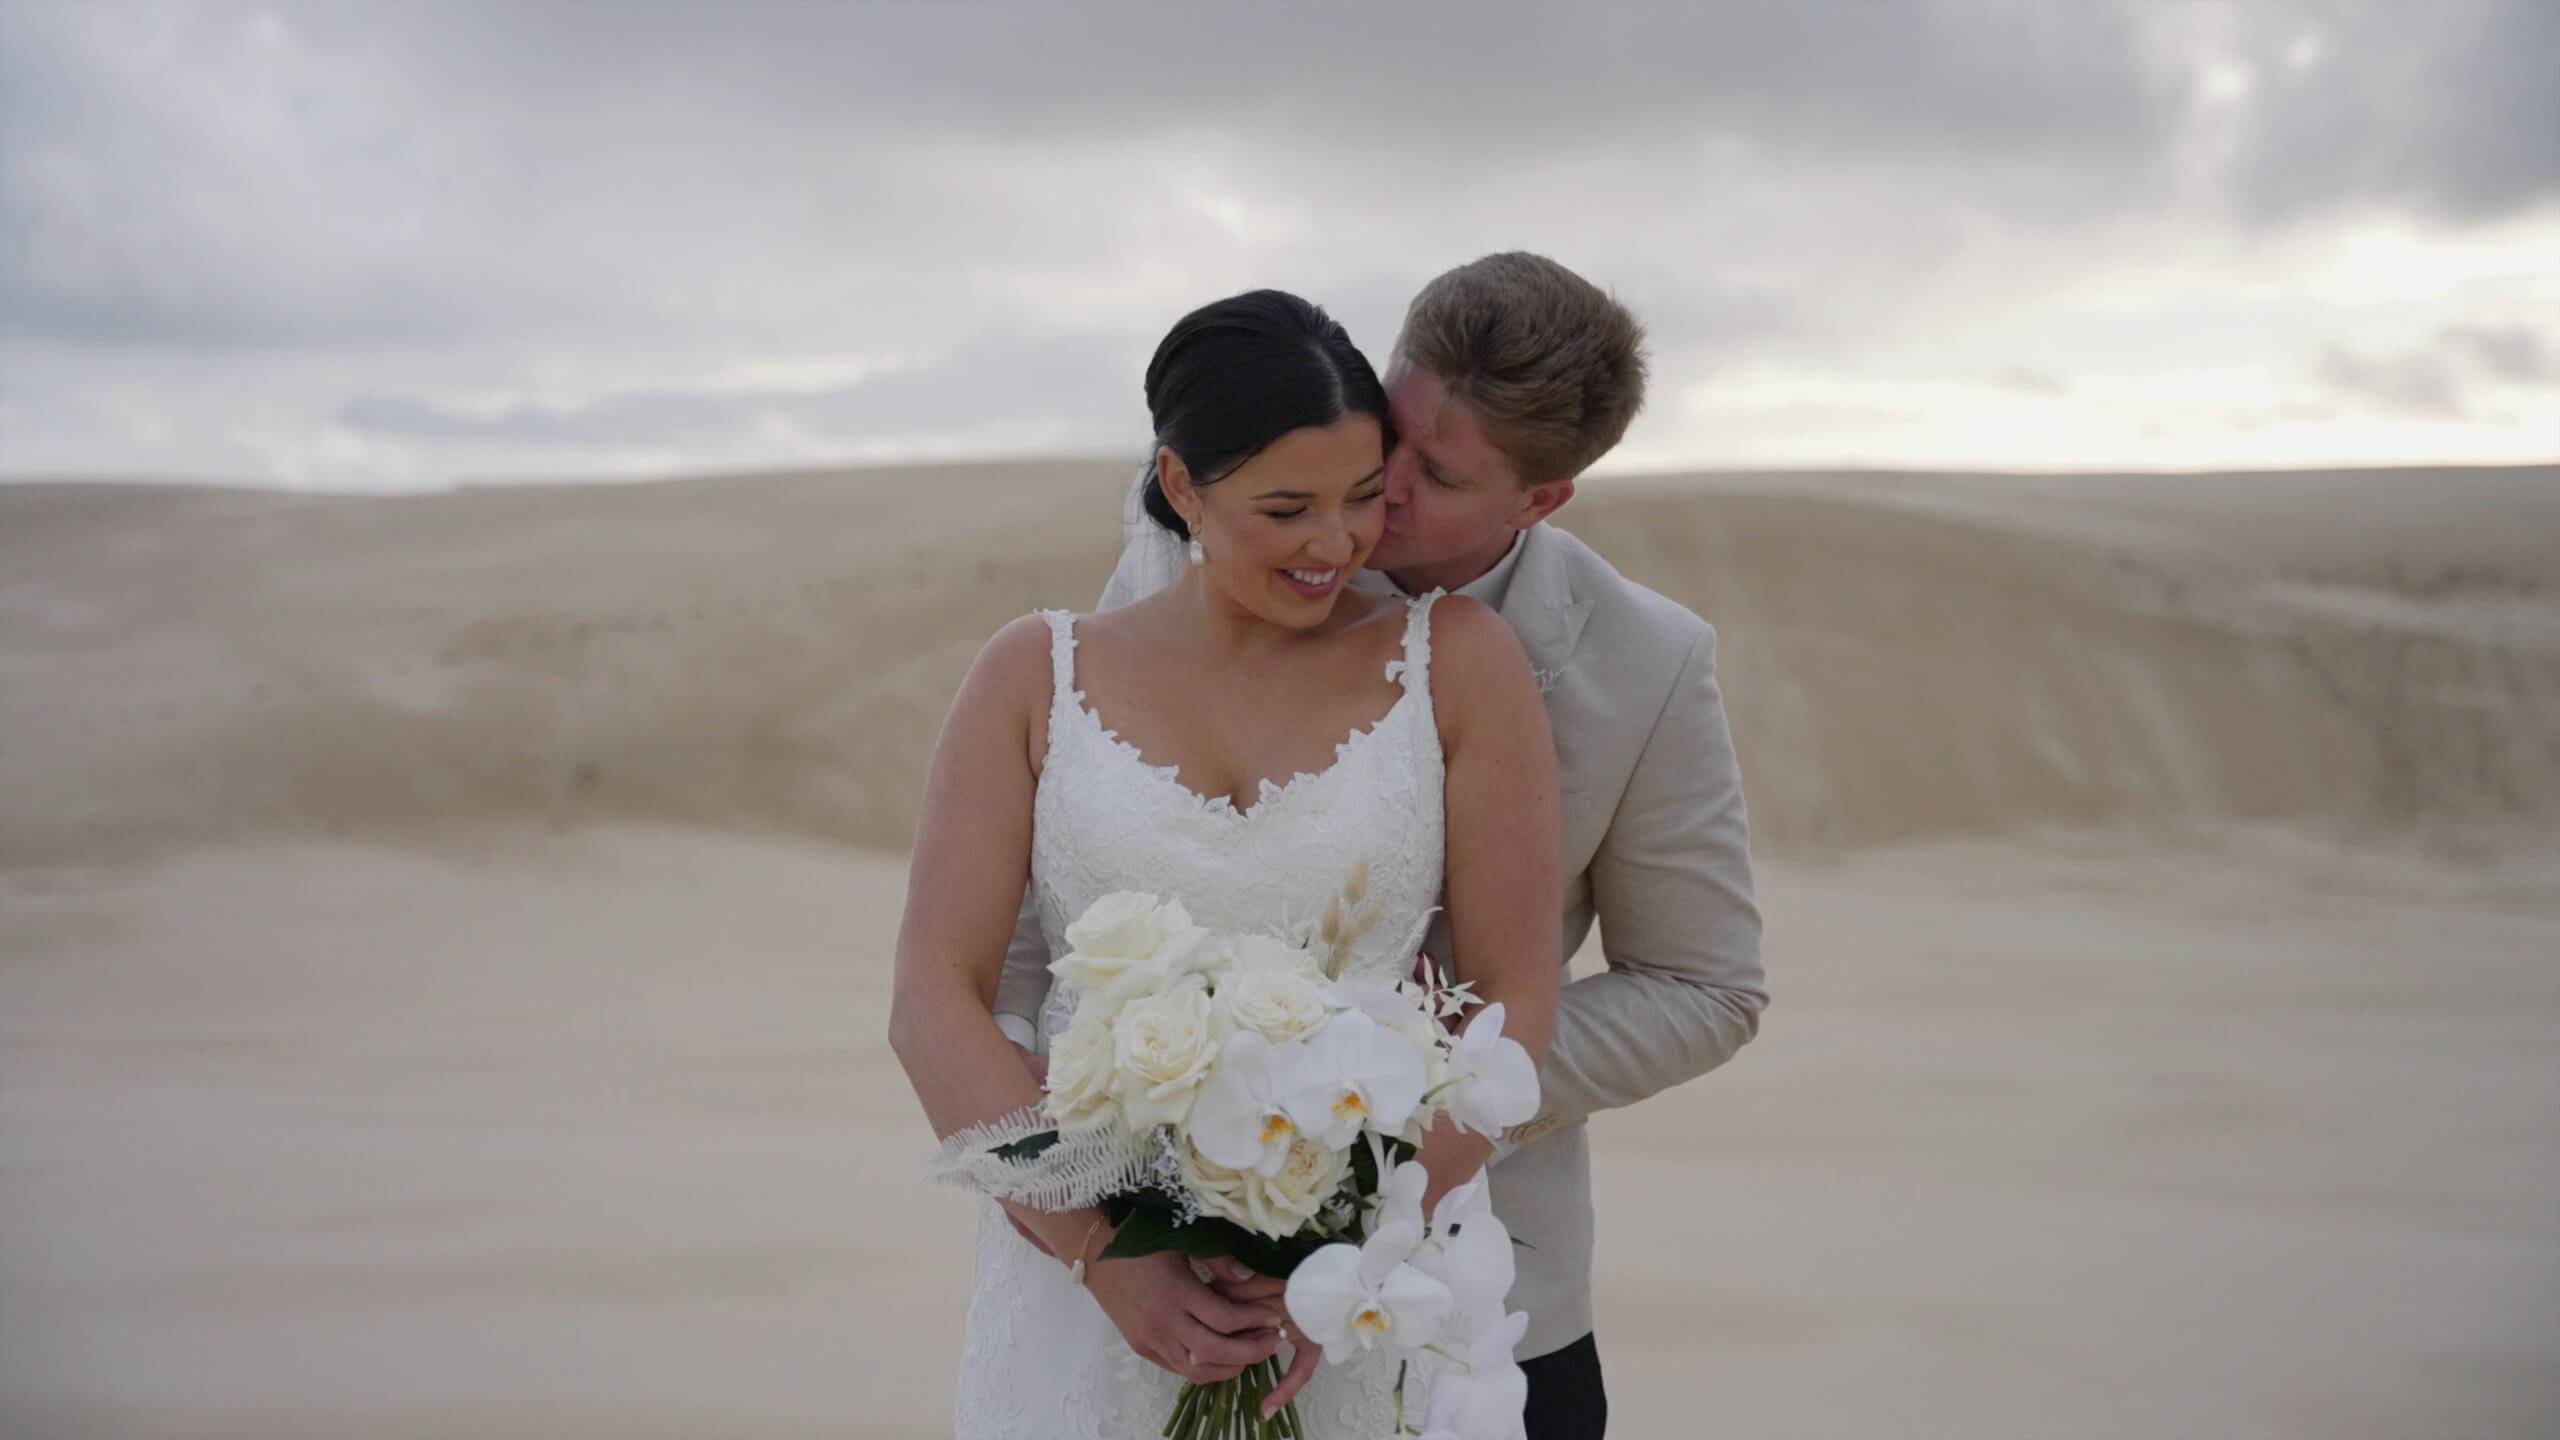 Liz + Tyron Highlight Film // Port Stephens Wedding Videography